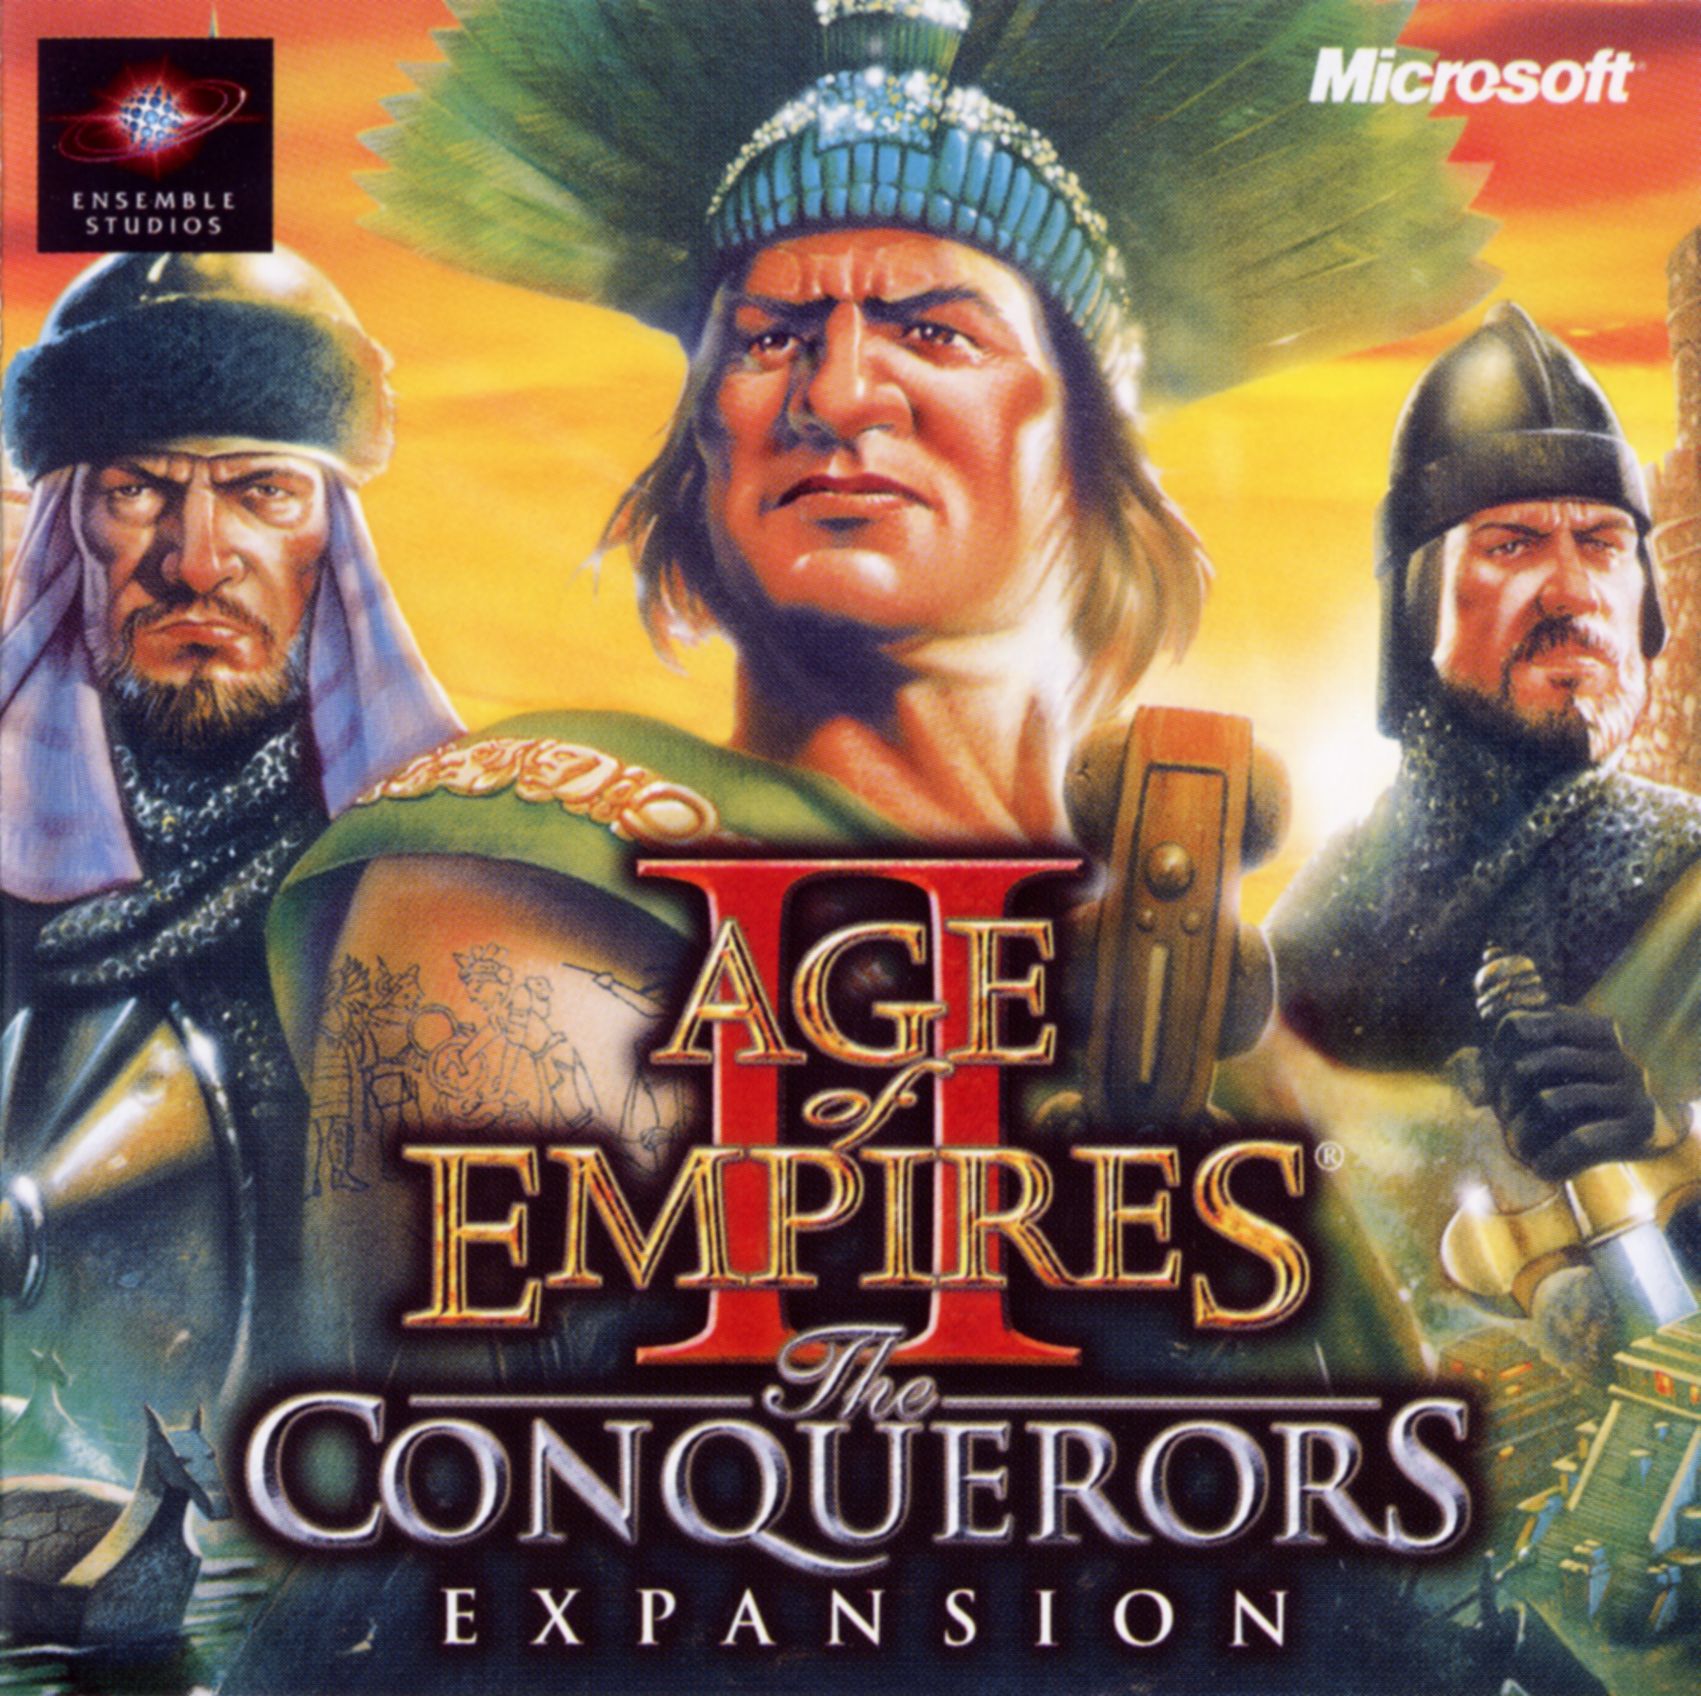 http://www.ilbaluardo.com/Cover/Pc/Age of Empires 2 - The Conquerors - Front.jpg